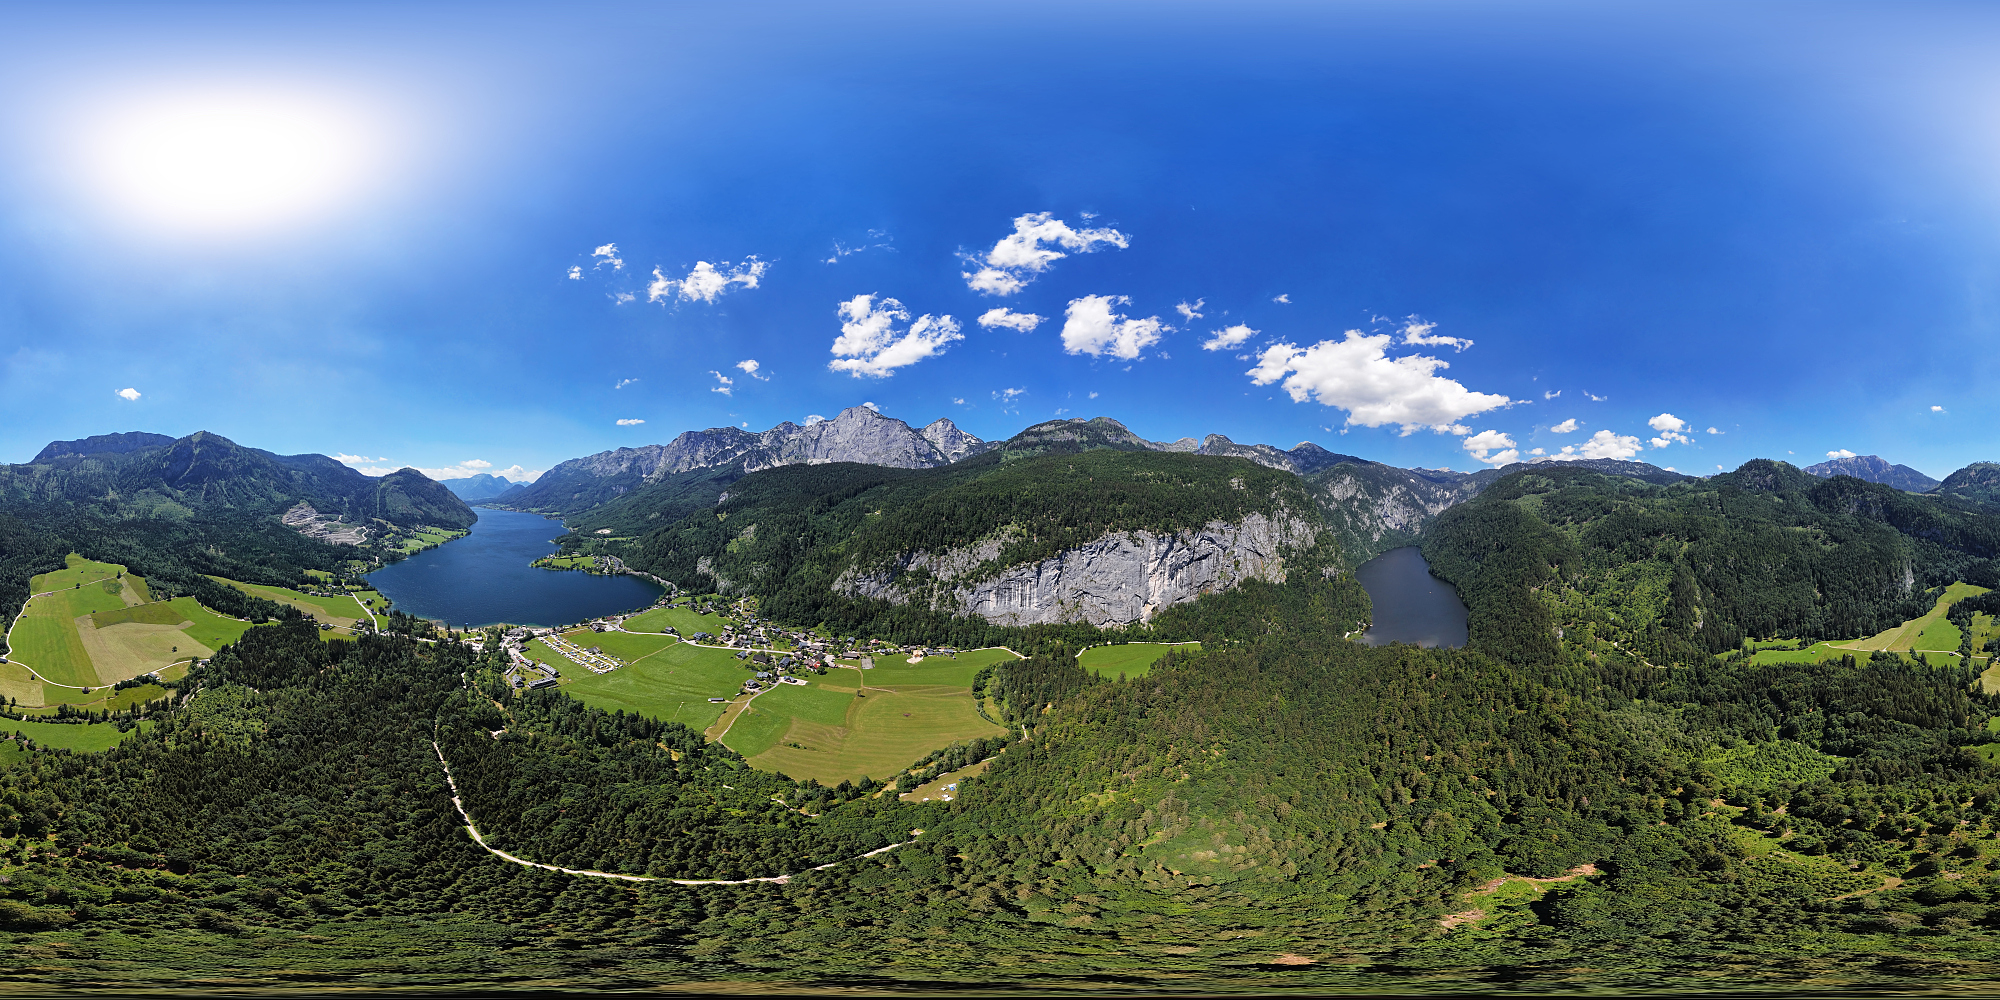 Toplitzsee (toplitzlake)和Grundlsee山湖的360度x180度全球形空中全景图，位于奥地利斯蒂里亚的Salzkammergut。图片下载